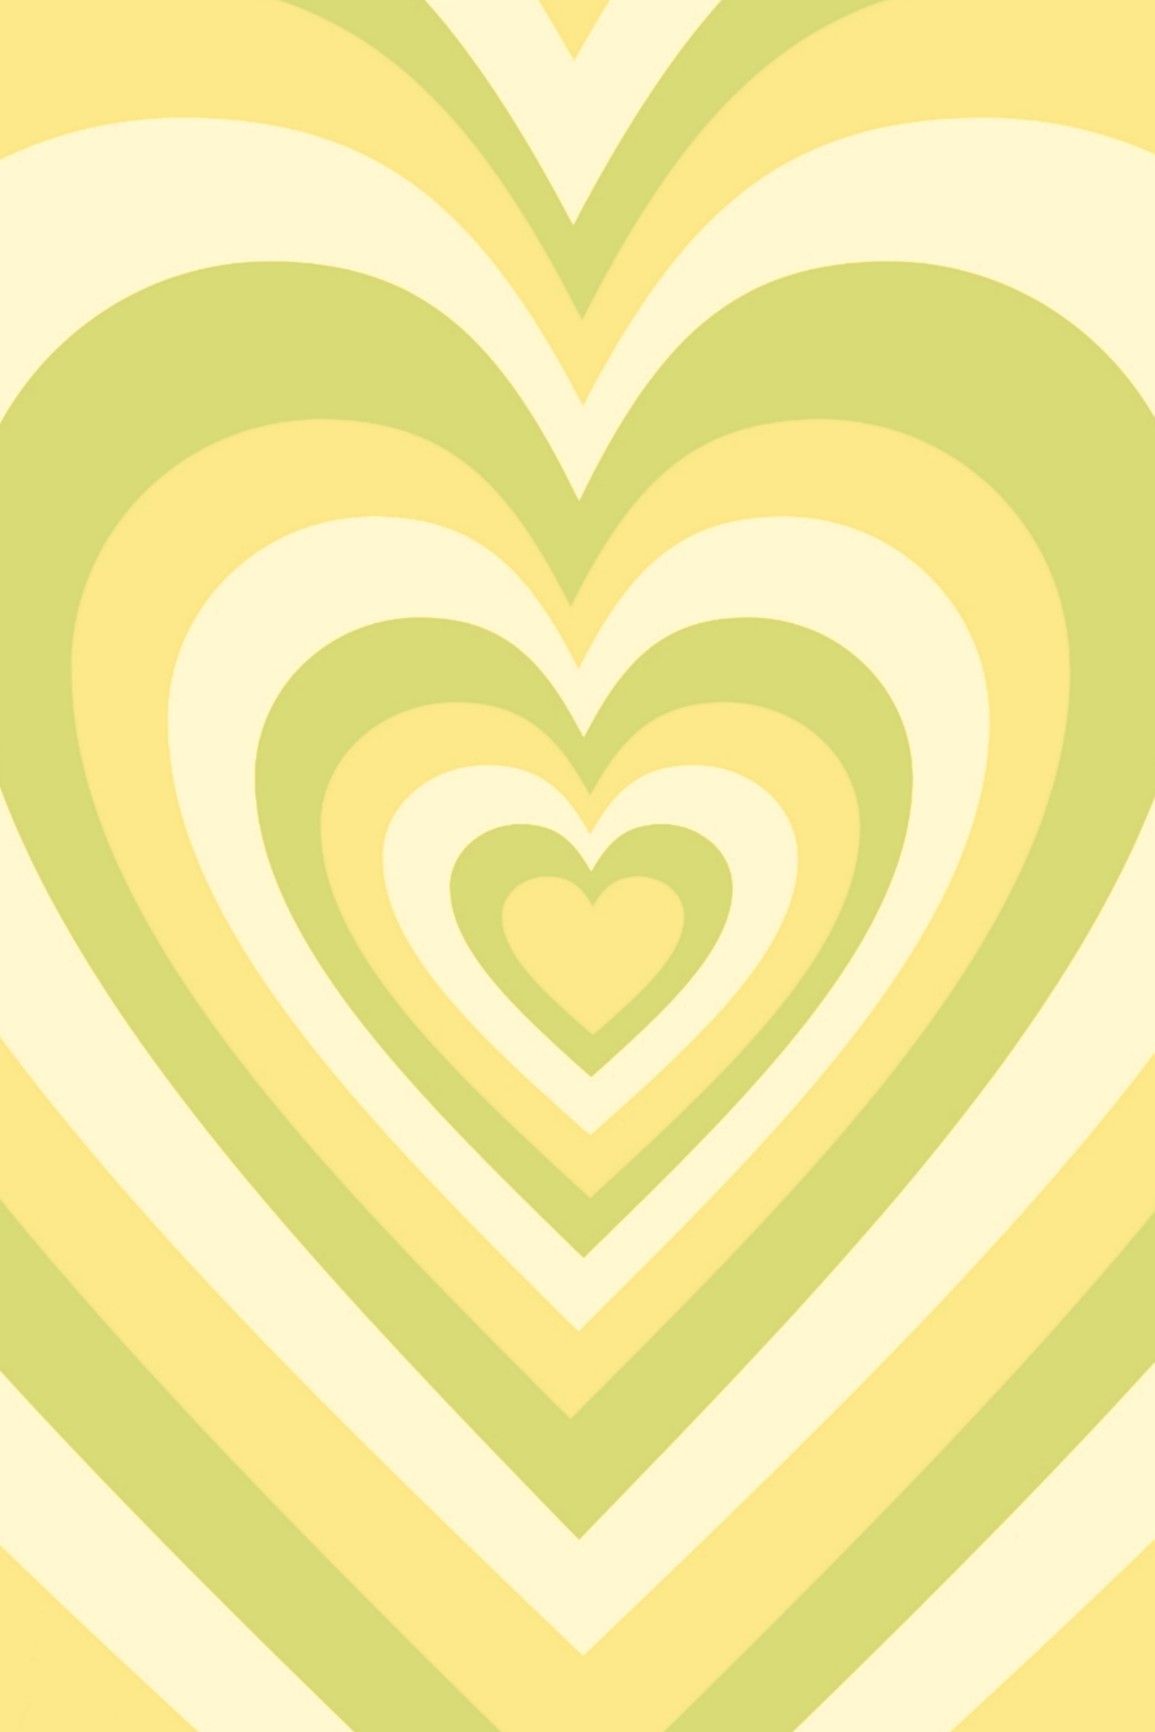 yellow heart background. Heart wallpaper, Retro wallpaper iphone, Abstract wallpaper design